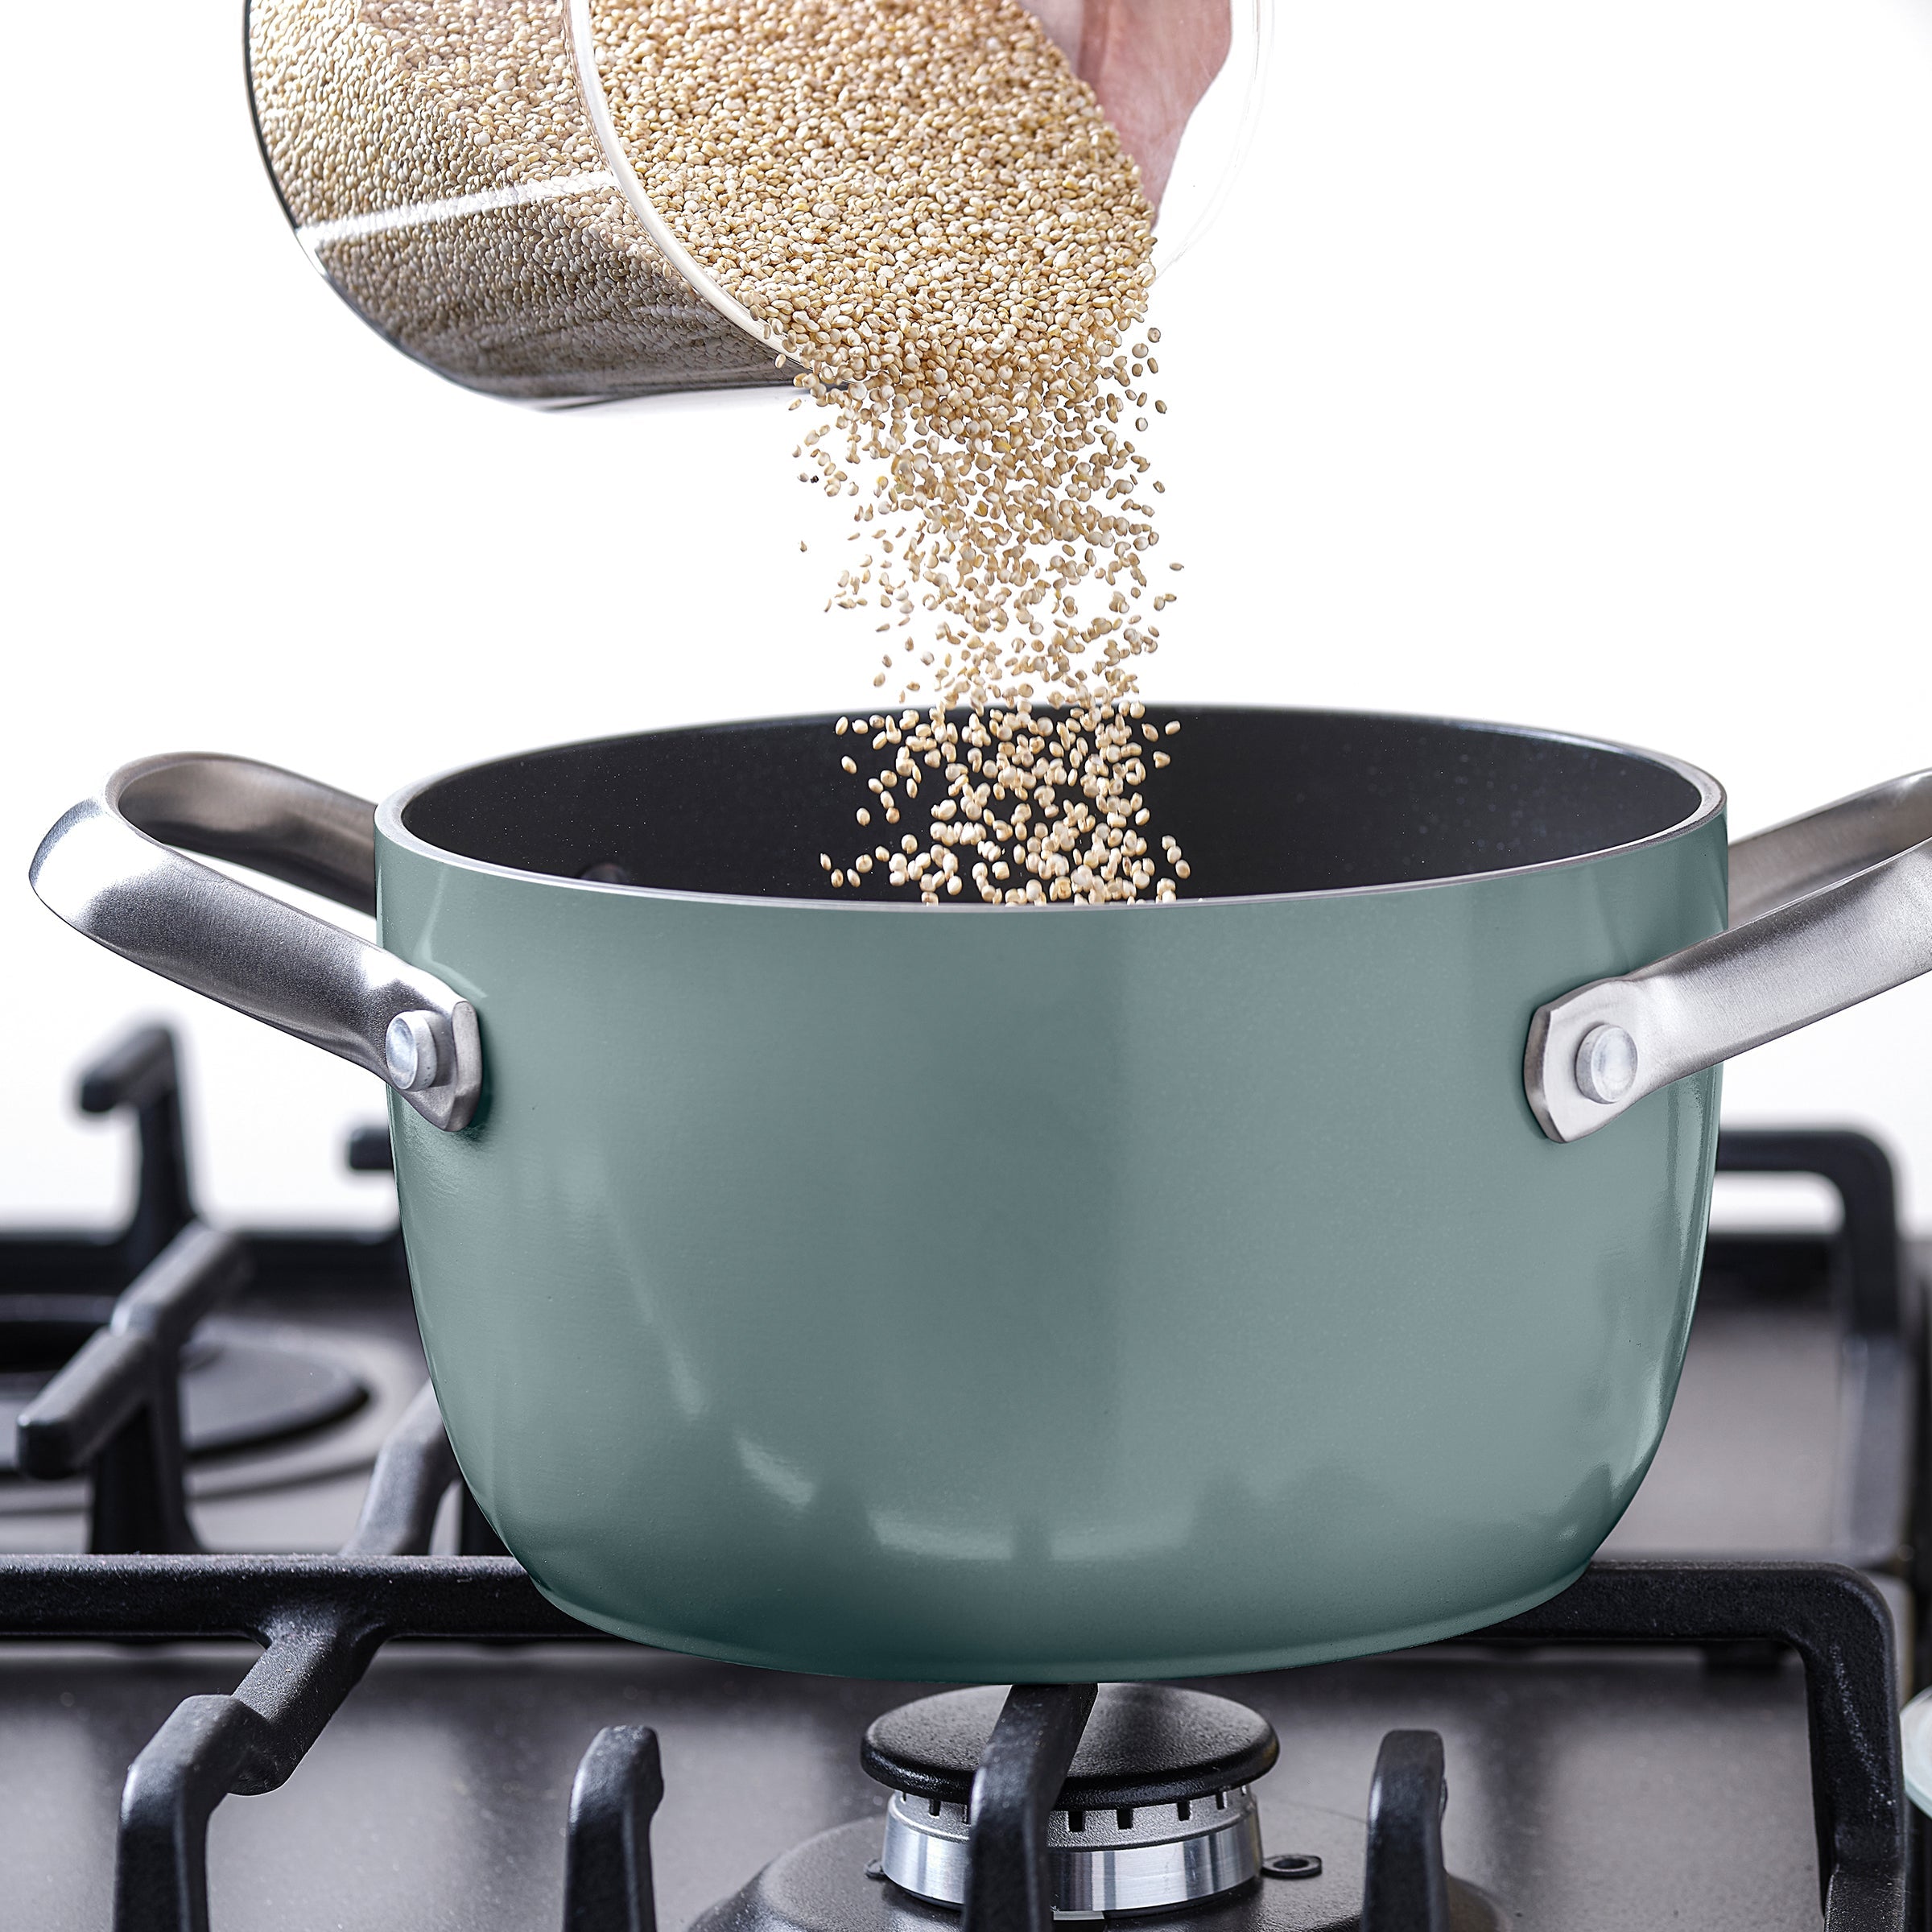 GreenPan 2-Quart Rice and Grains Cooker - Merlot